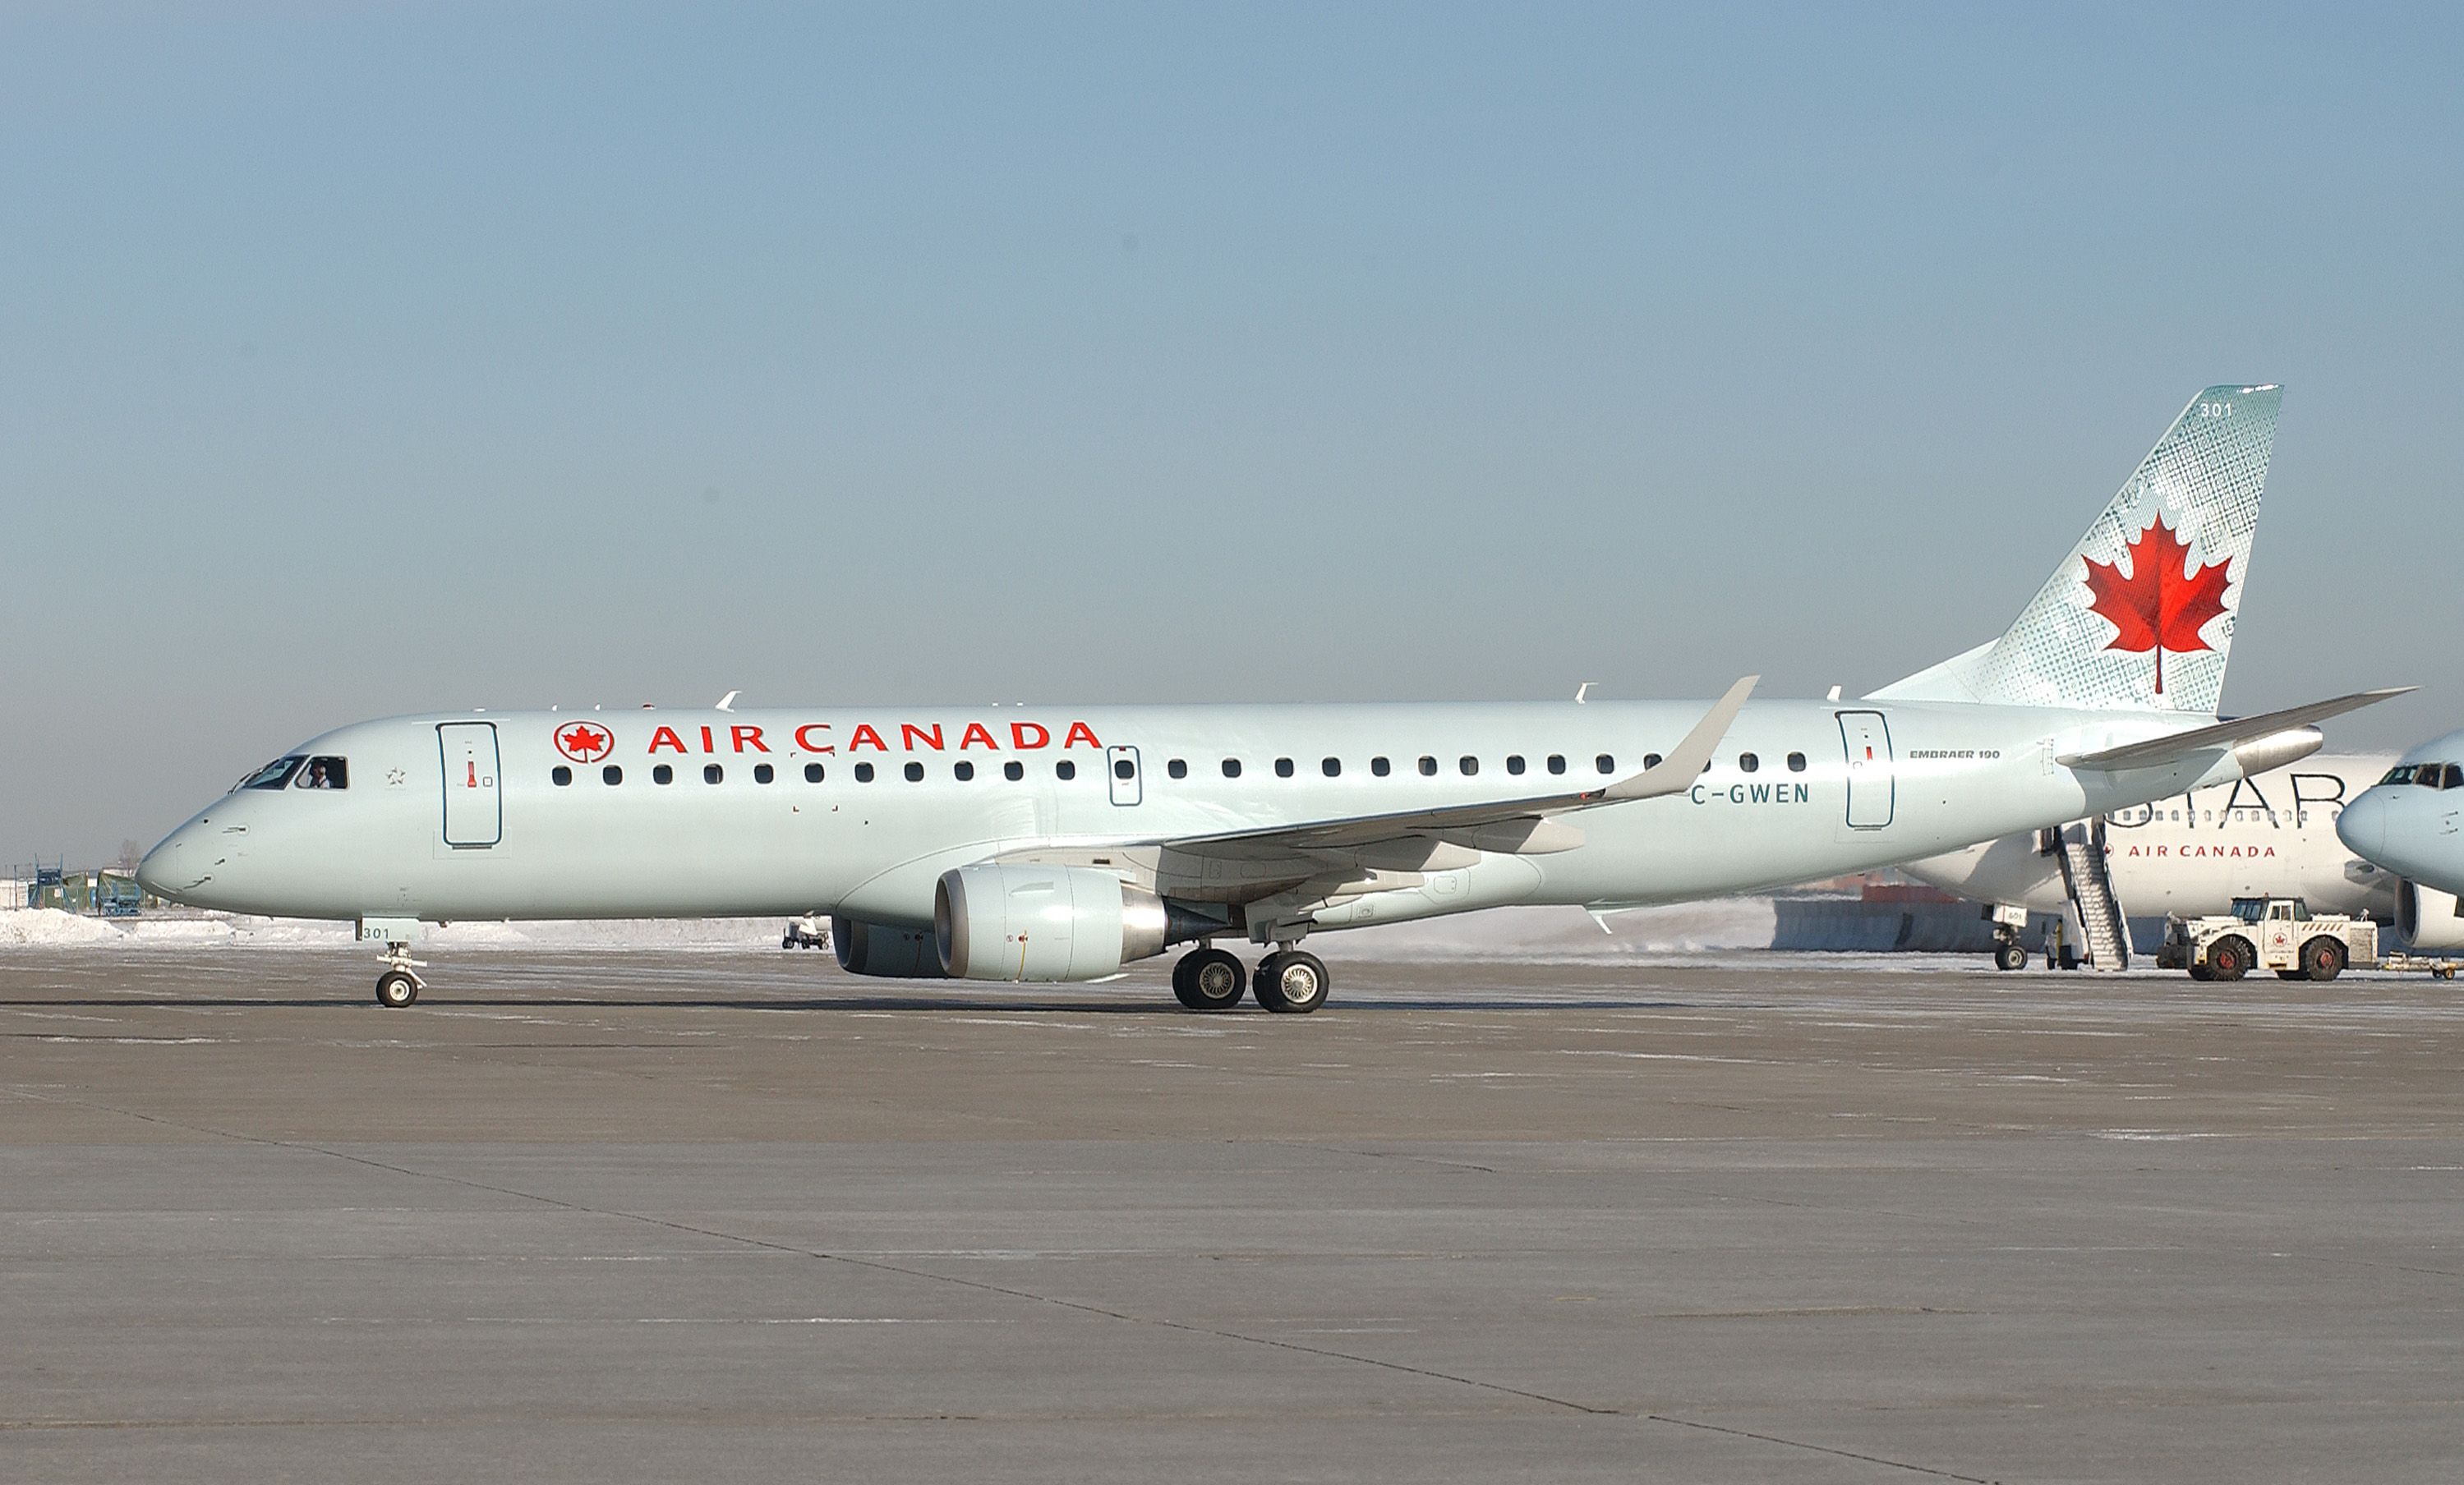 An Air Canada Embraer E190 On an airport apron.